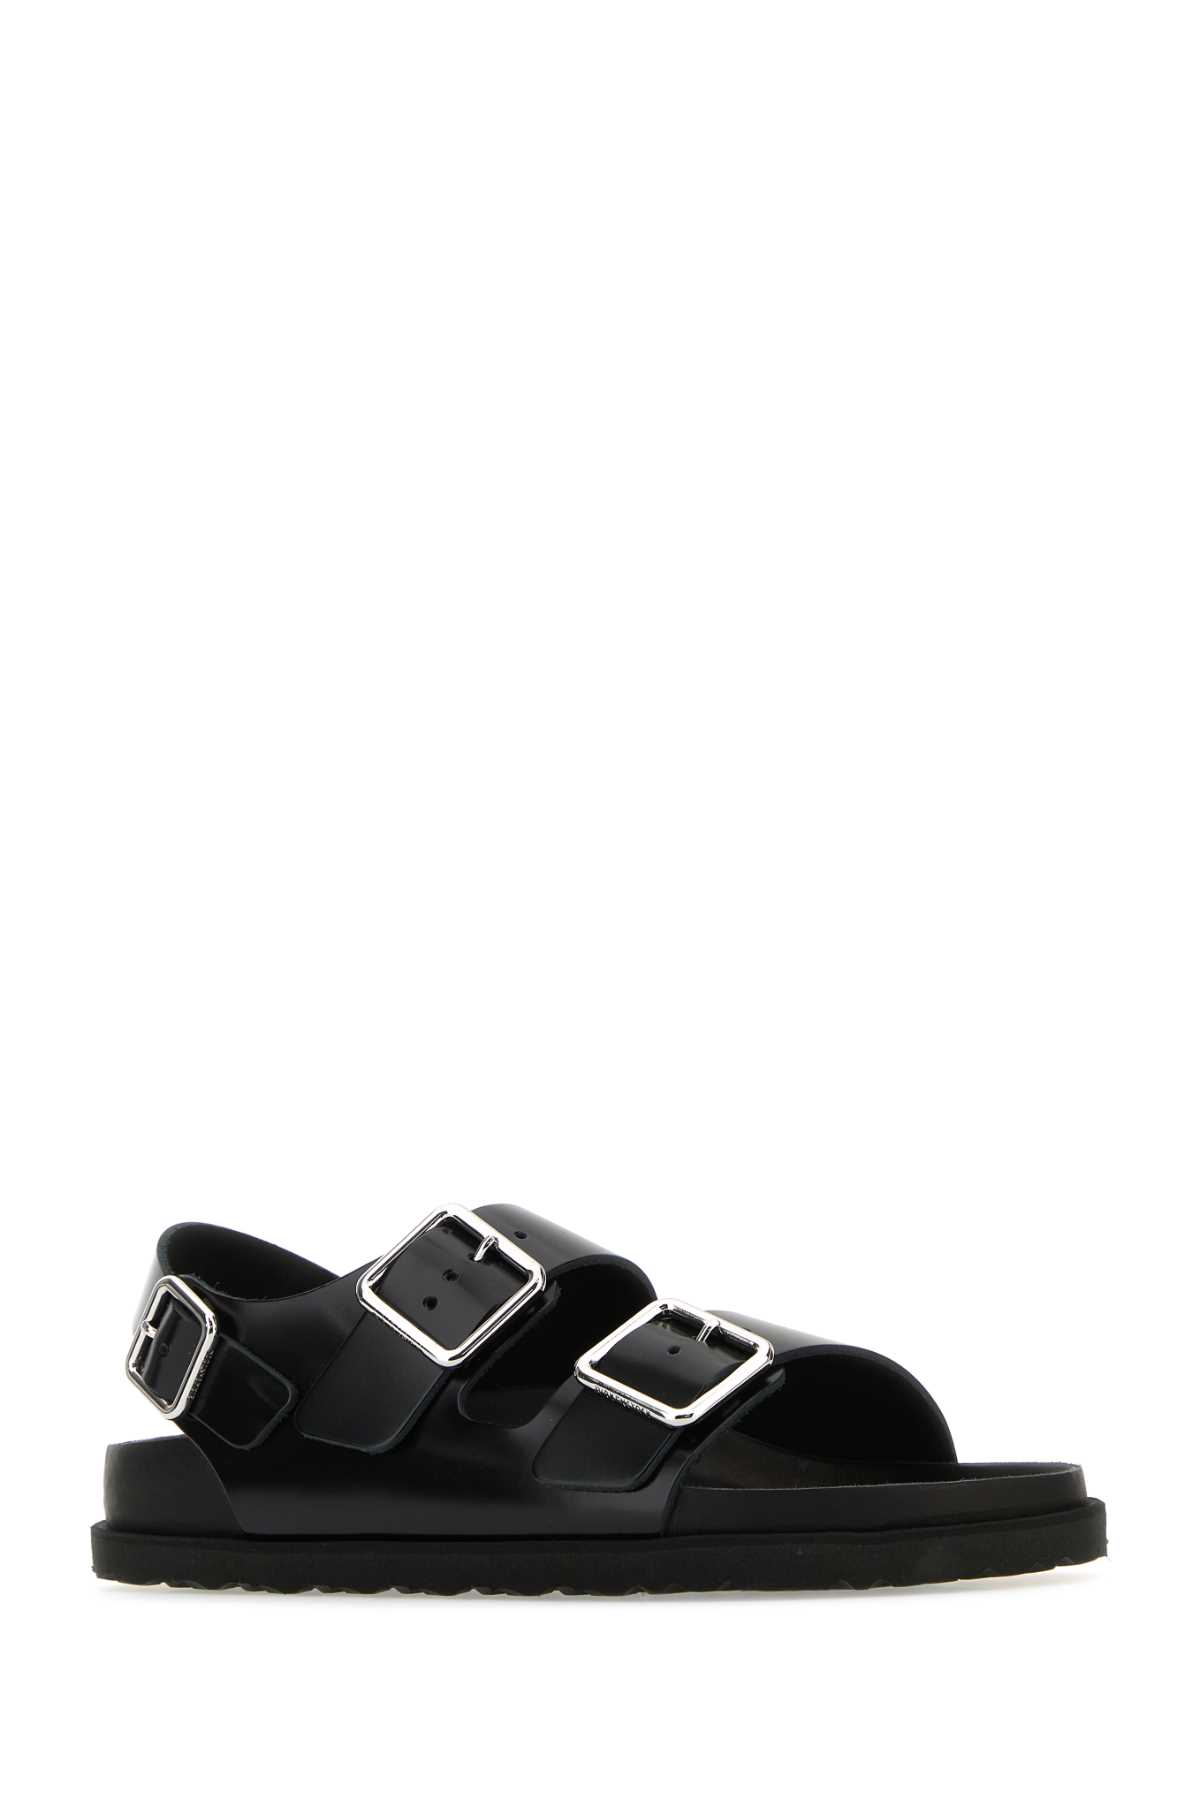 Shop Birkenstock Black Leather Milano Avantgarde Sandals